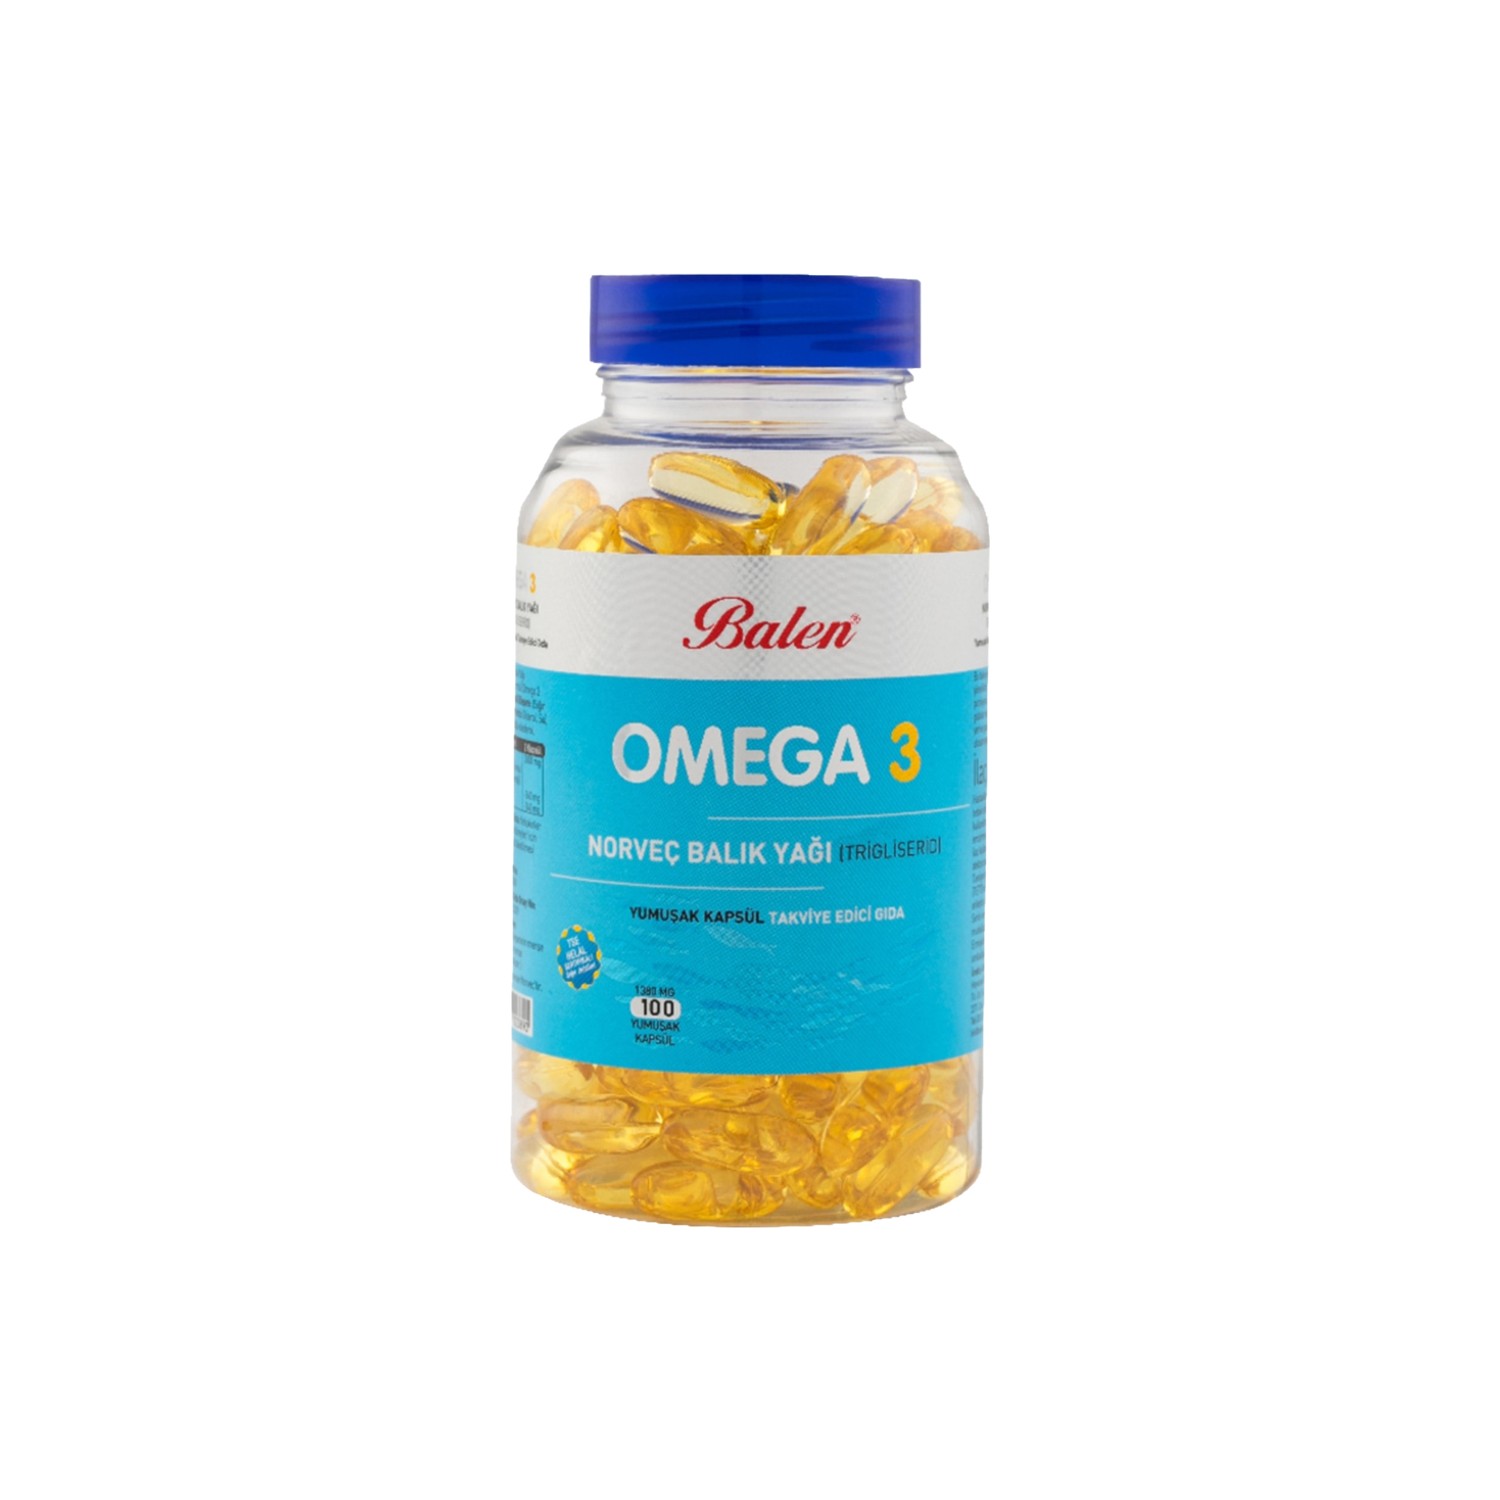 Рыбий жир Balen Omega 3, 100 капсул, 1380 мг рыбий жир капсулы для детей 200 мг 100 шт